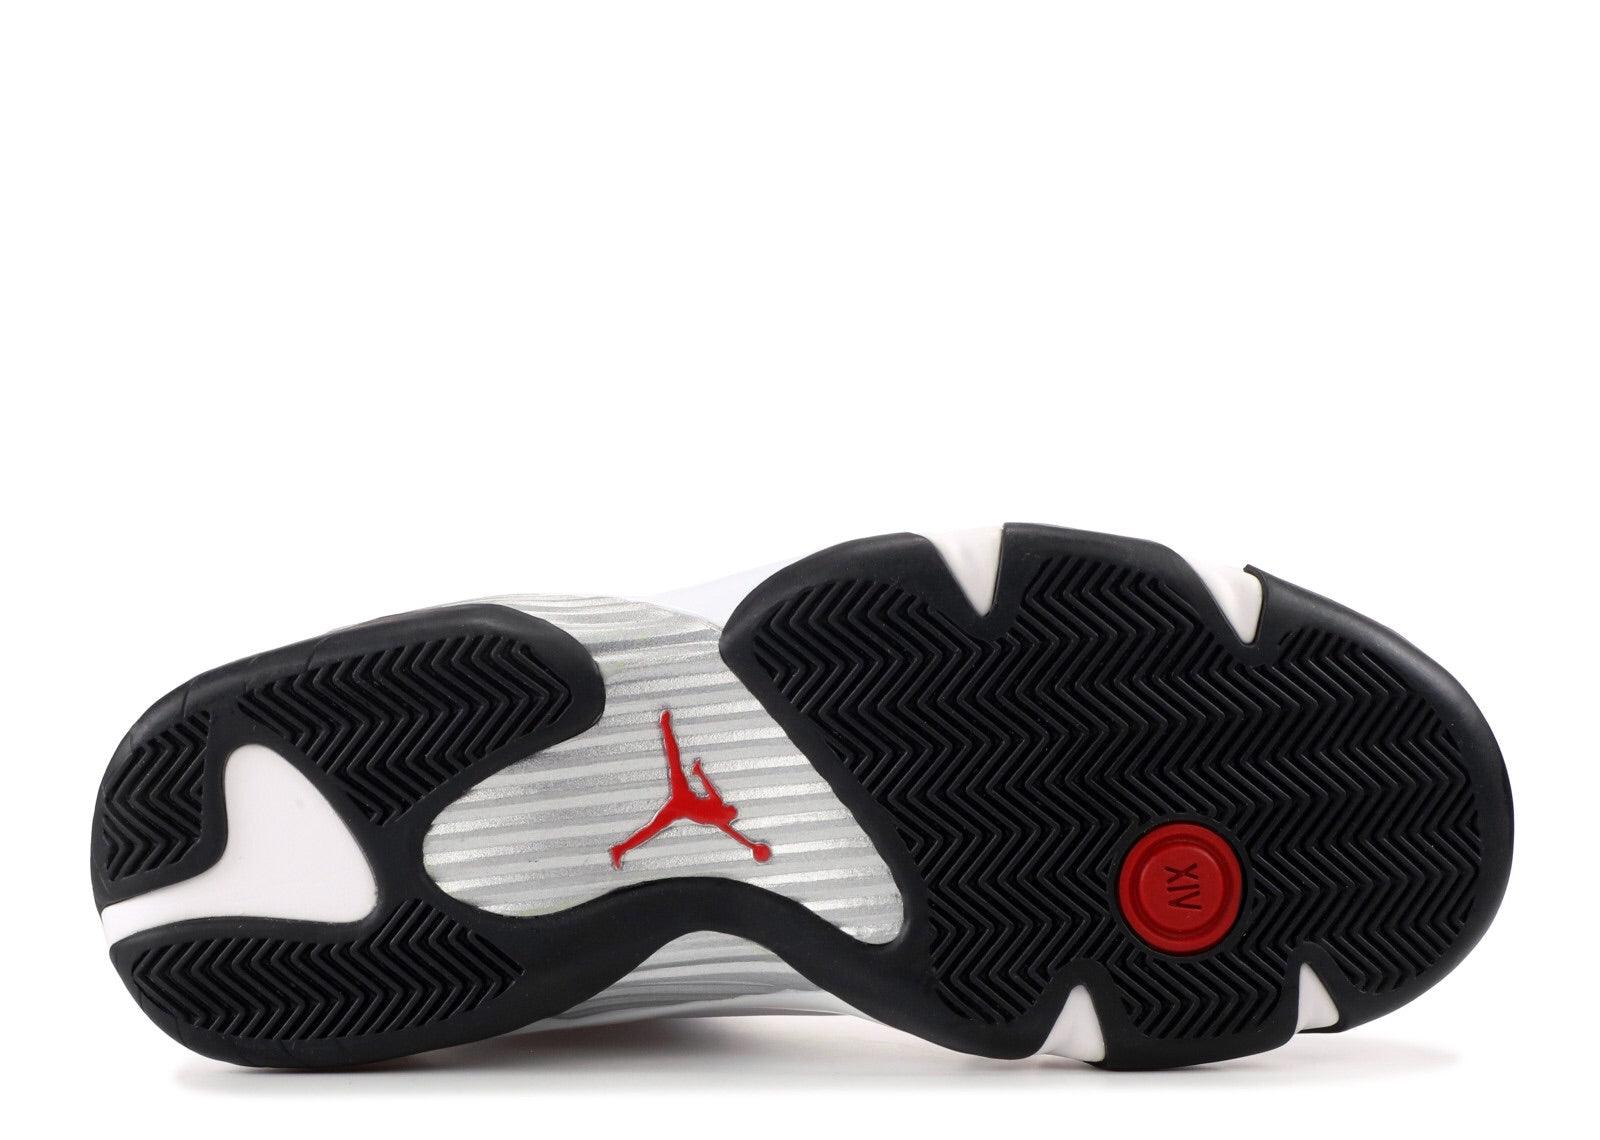 Air Jordan 14 Retro “Black Toe” - KicksOfAmerica